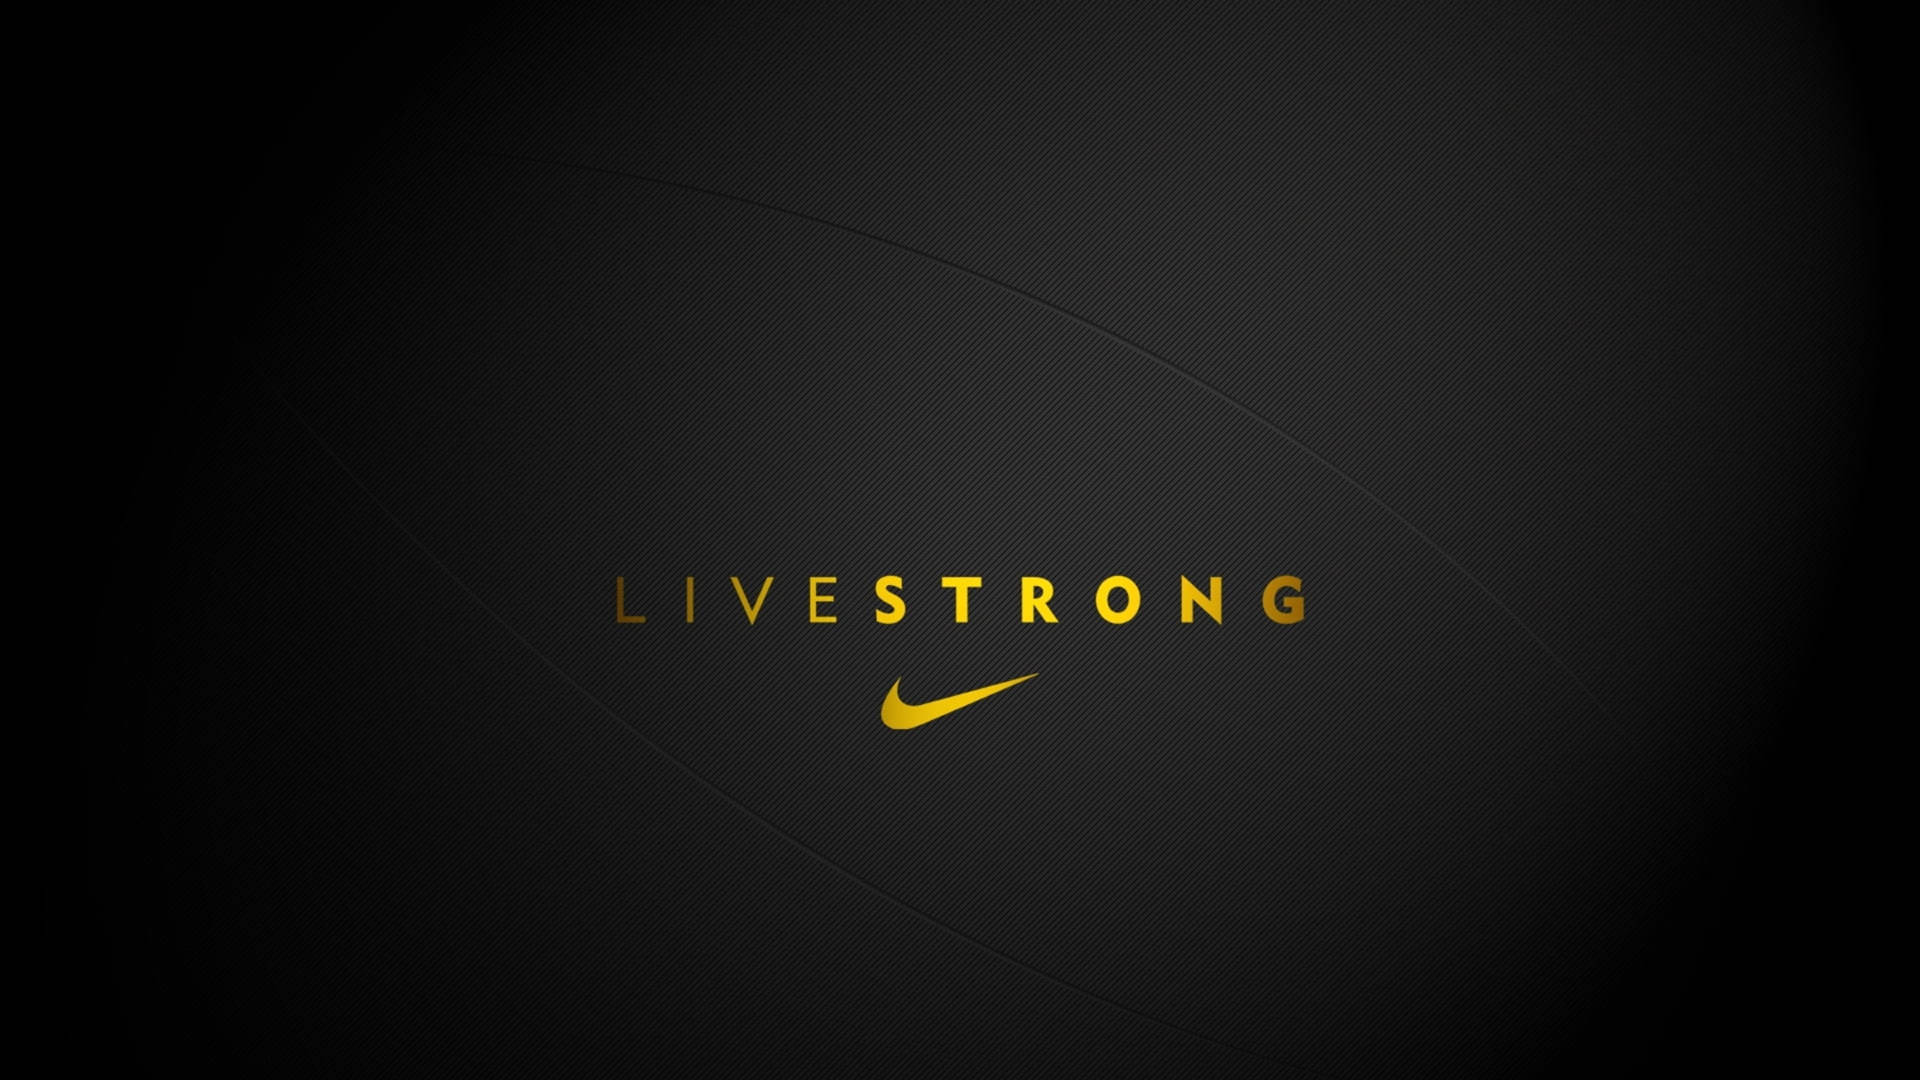 Schwarzund Gold Nike Live Strong Wallpaper